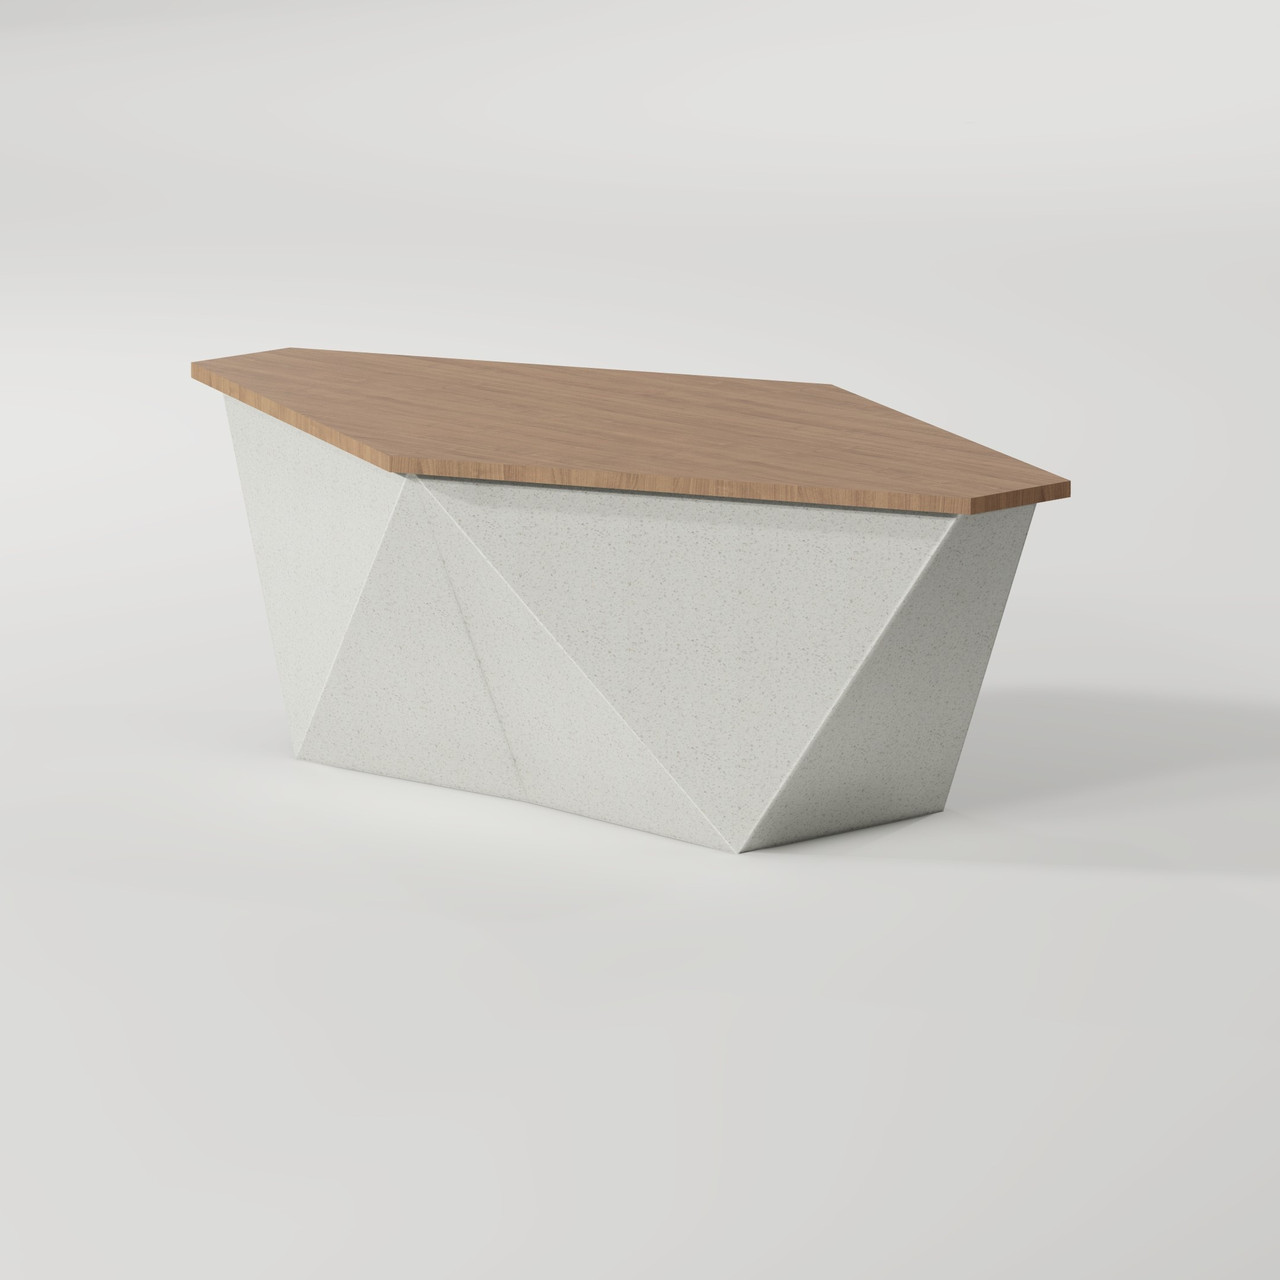 Стол из композитного мраморного камня Архитас c деревянным настилом Uno